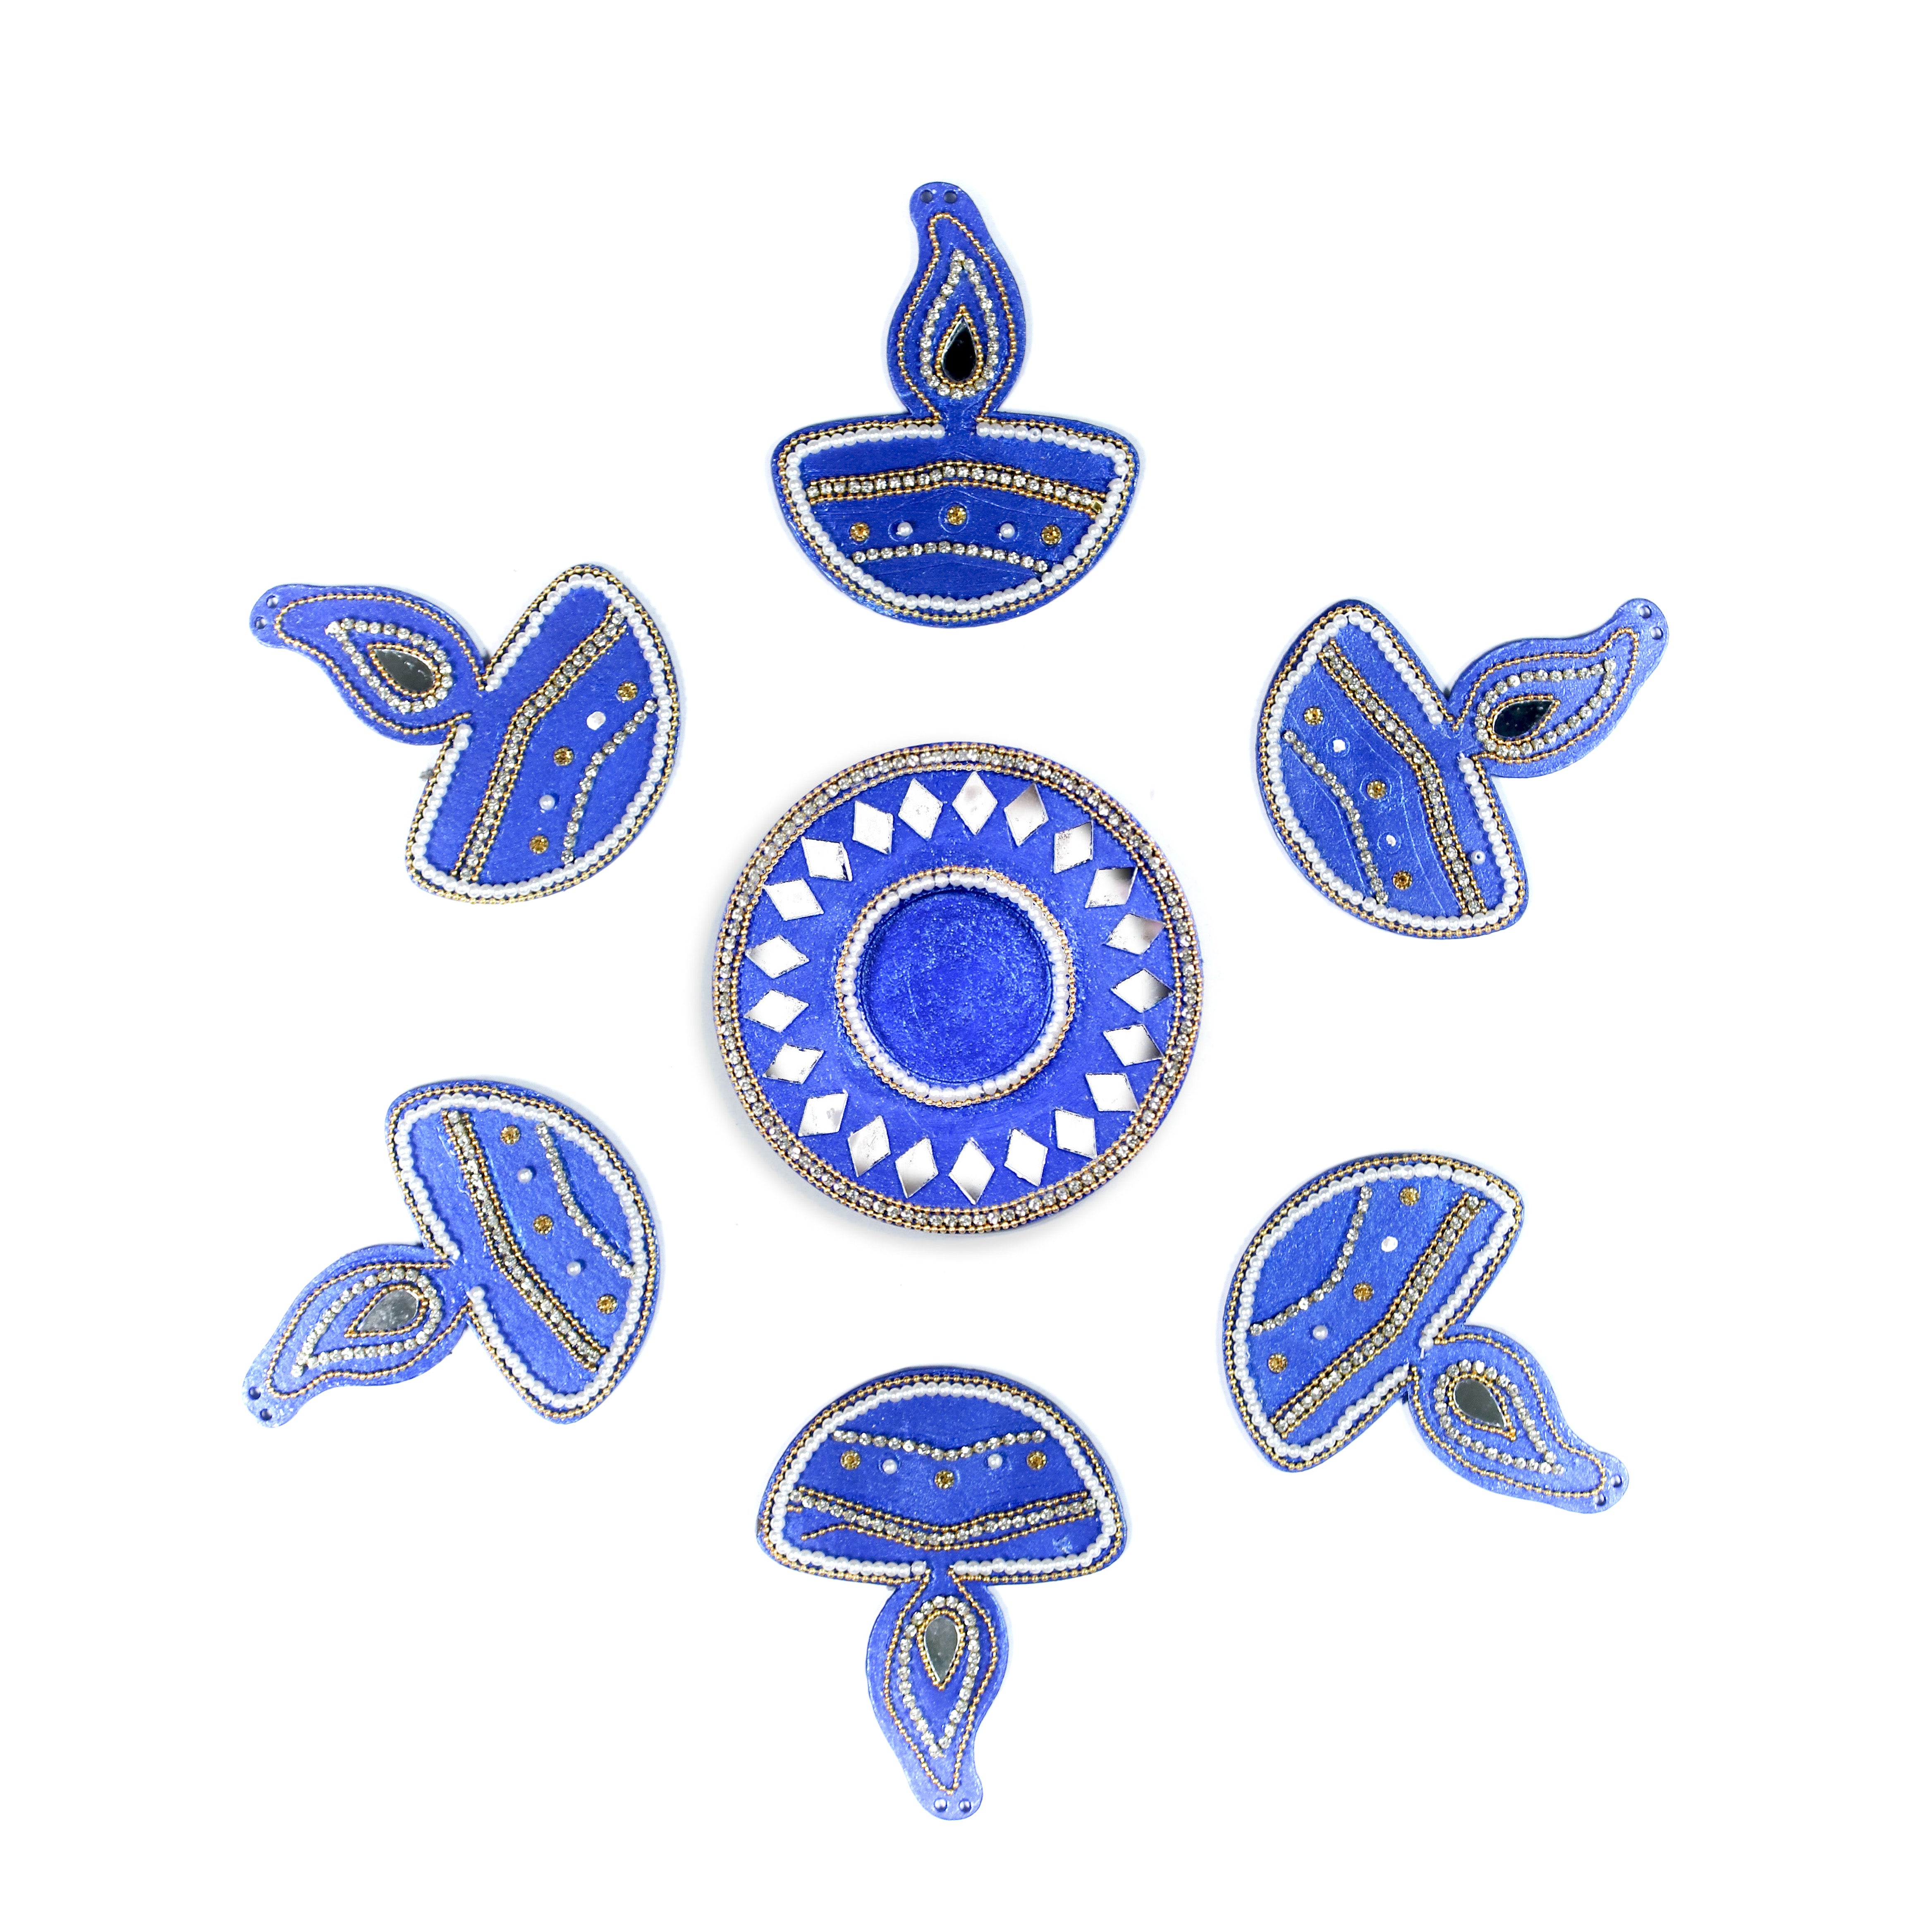 Diwali Decor Combo - Mirror Work Tealight Holder Diamond Delight Blue 4in Dia & Ornate Festive Lamp Hanging Decor Blue (pack of 7pc)